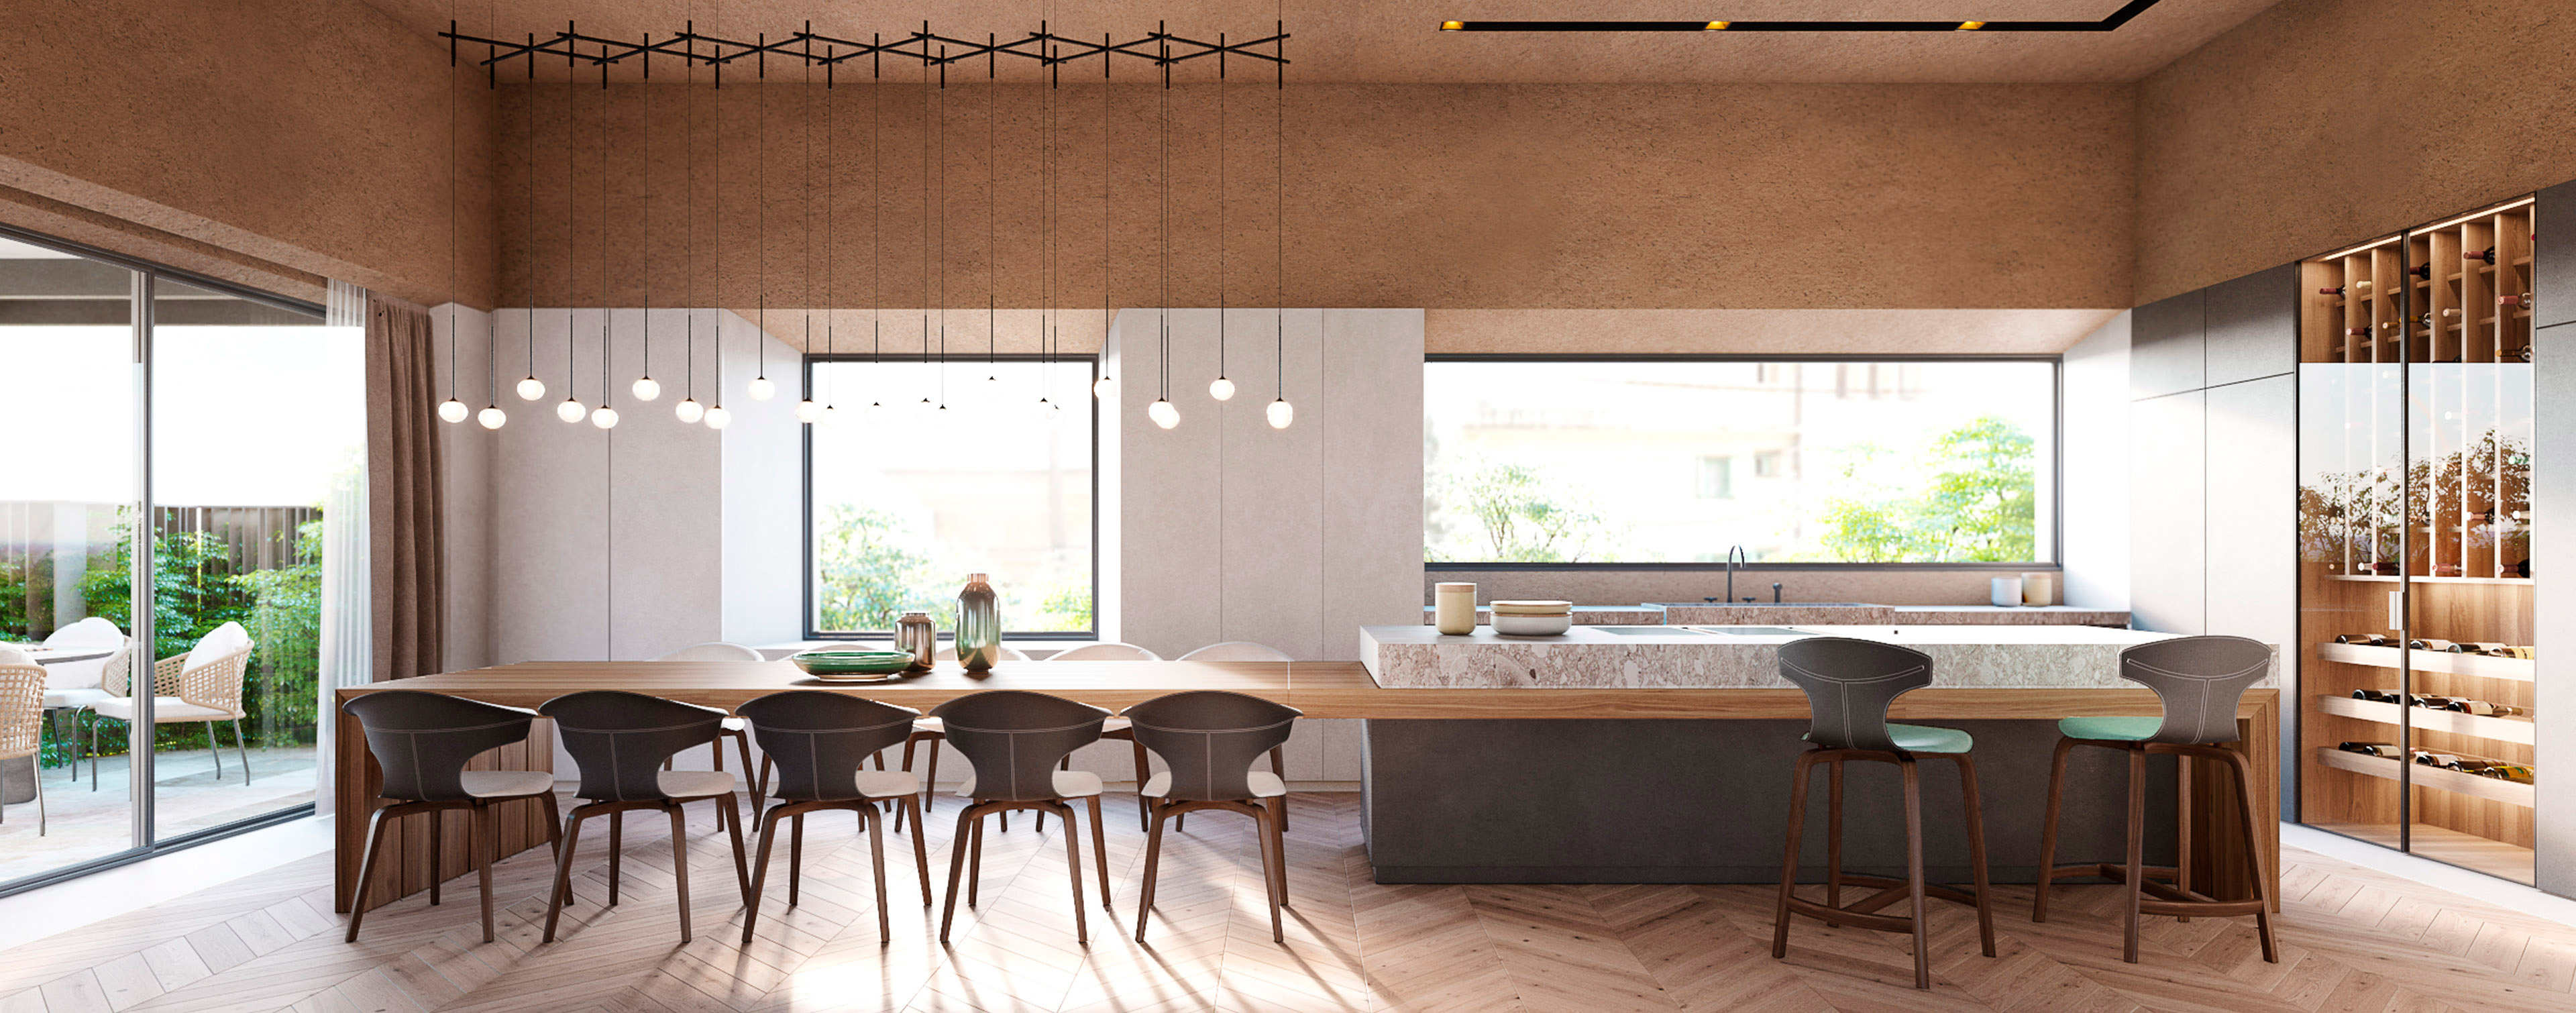 luv studio luxury architects barcelona pedralbes spc house IMG 01 - LUV Studio - Arquitectura y diseño - Barcelona